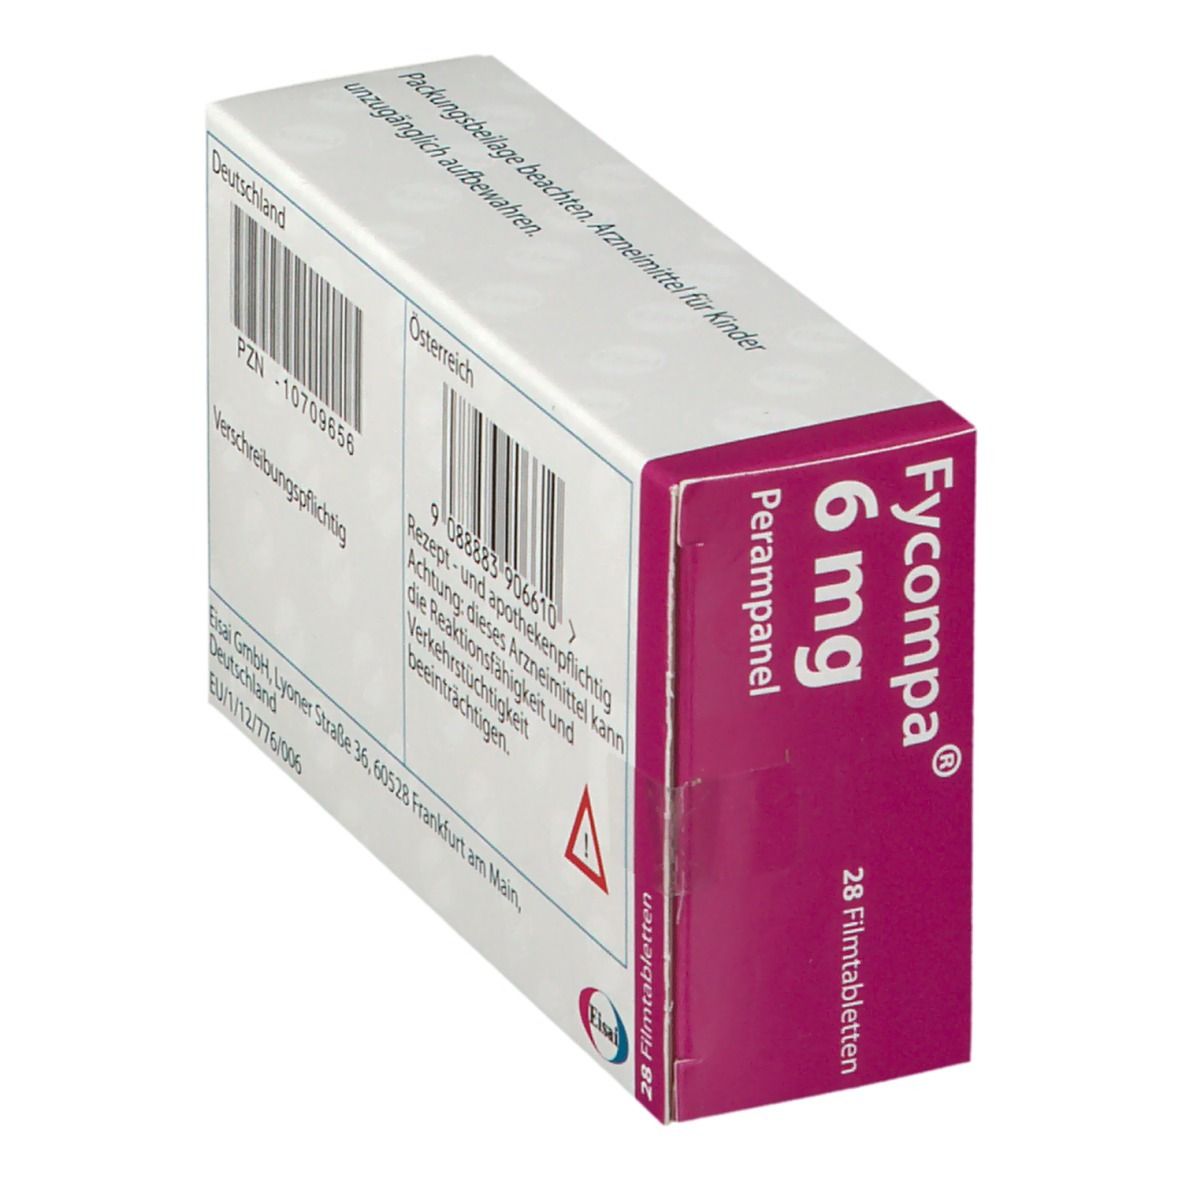 Fycompa® 6 mg